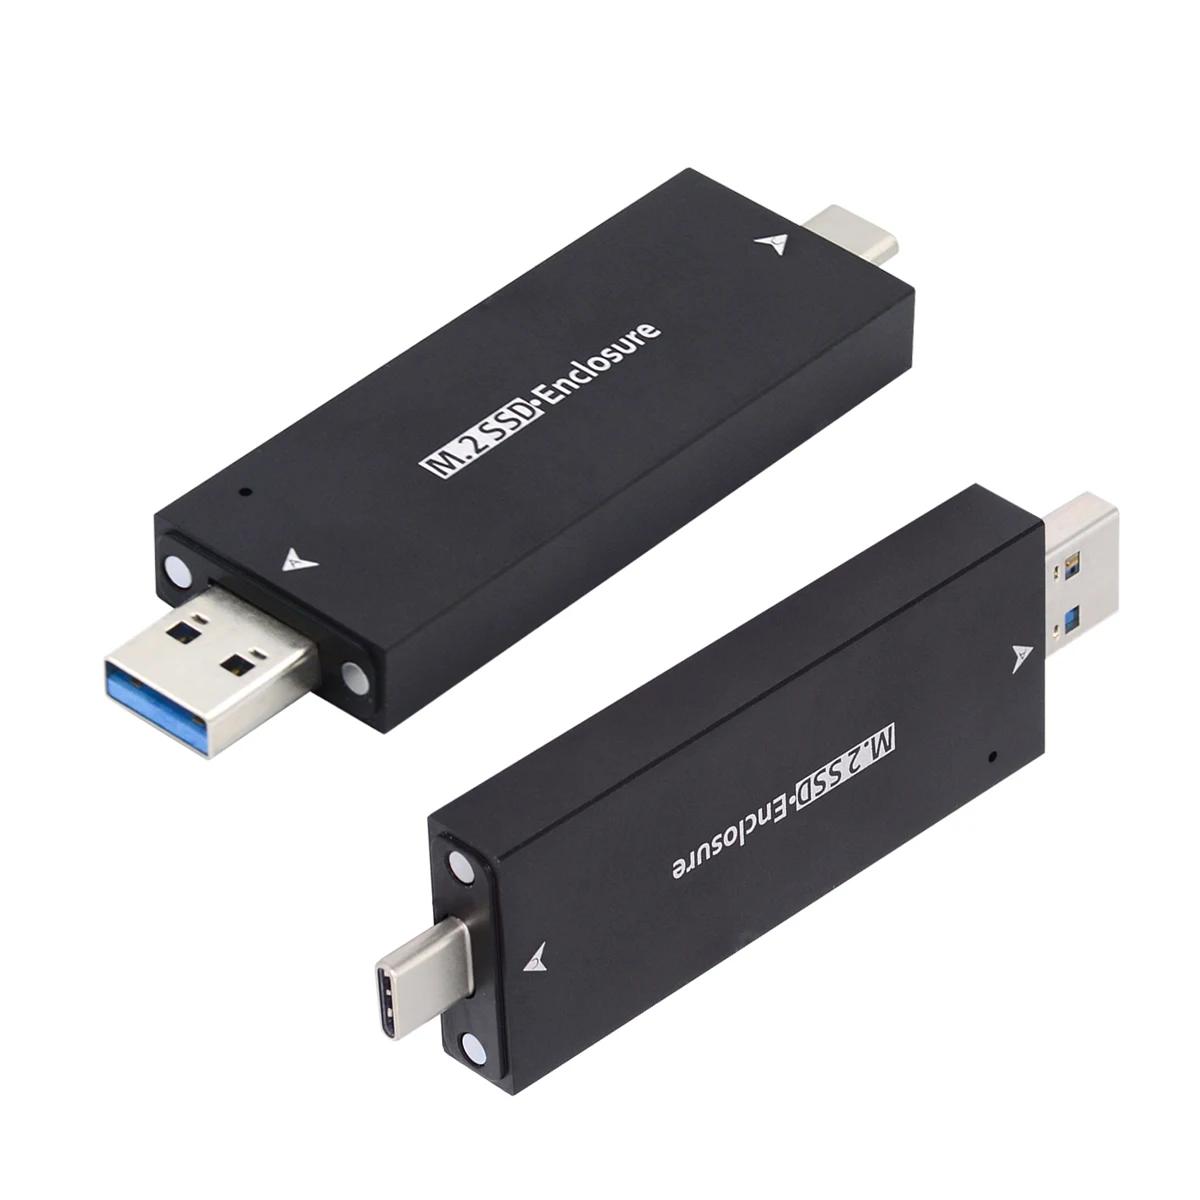 RTL9210B Chipset PCBA Case 2230/2242mm Adapter Combo Type-C & USB3.0 to NVME M-key M.2 NGFF SATA SSD